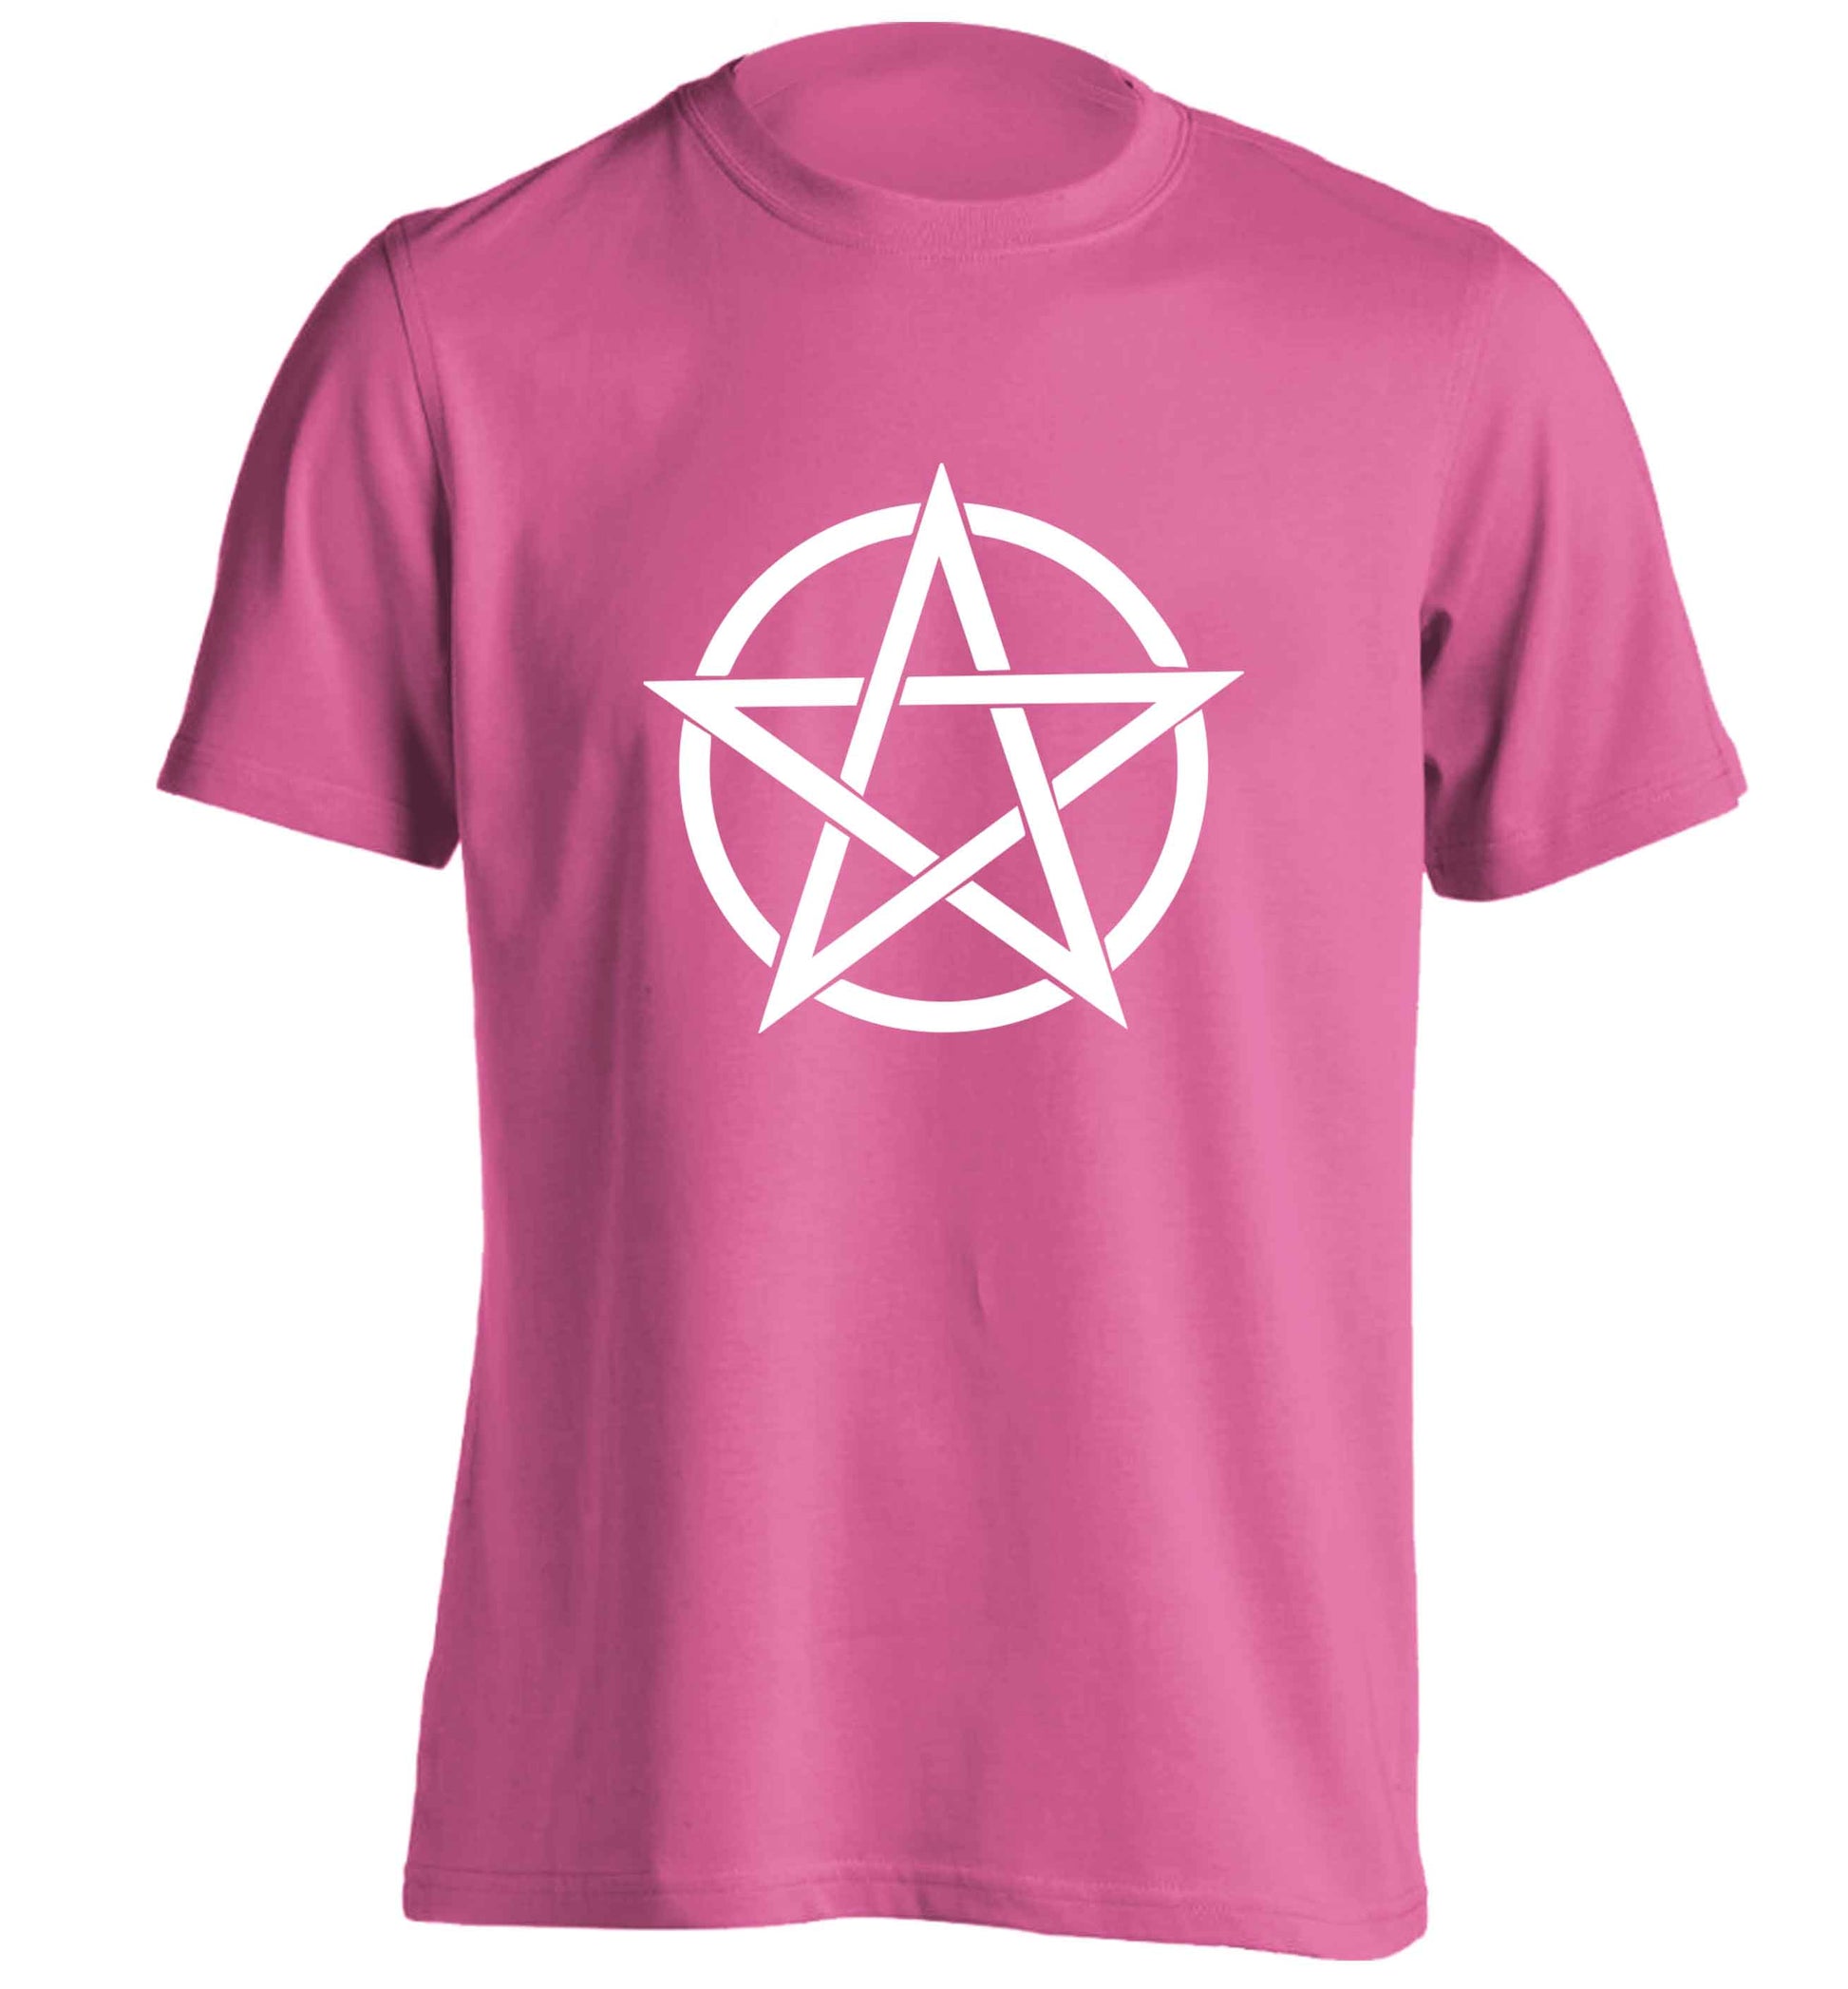 Pentagram symbol adults unisex pink Tshirt 2XL